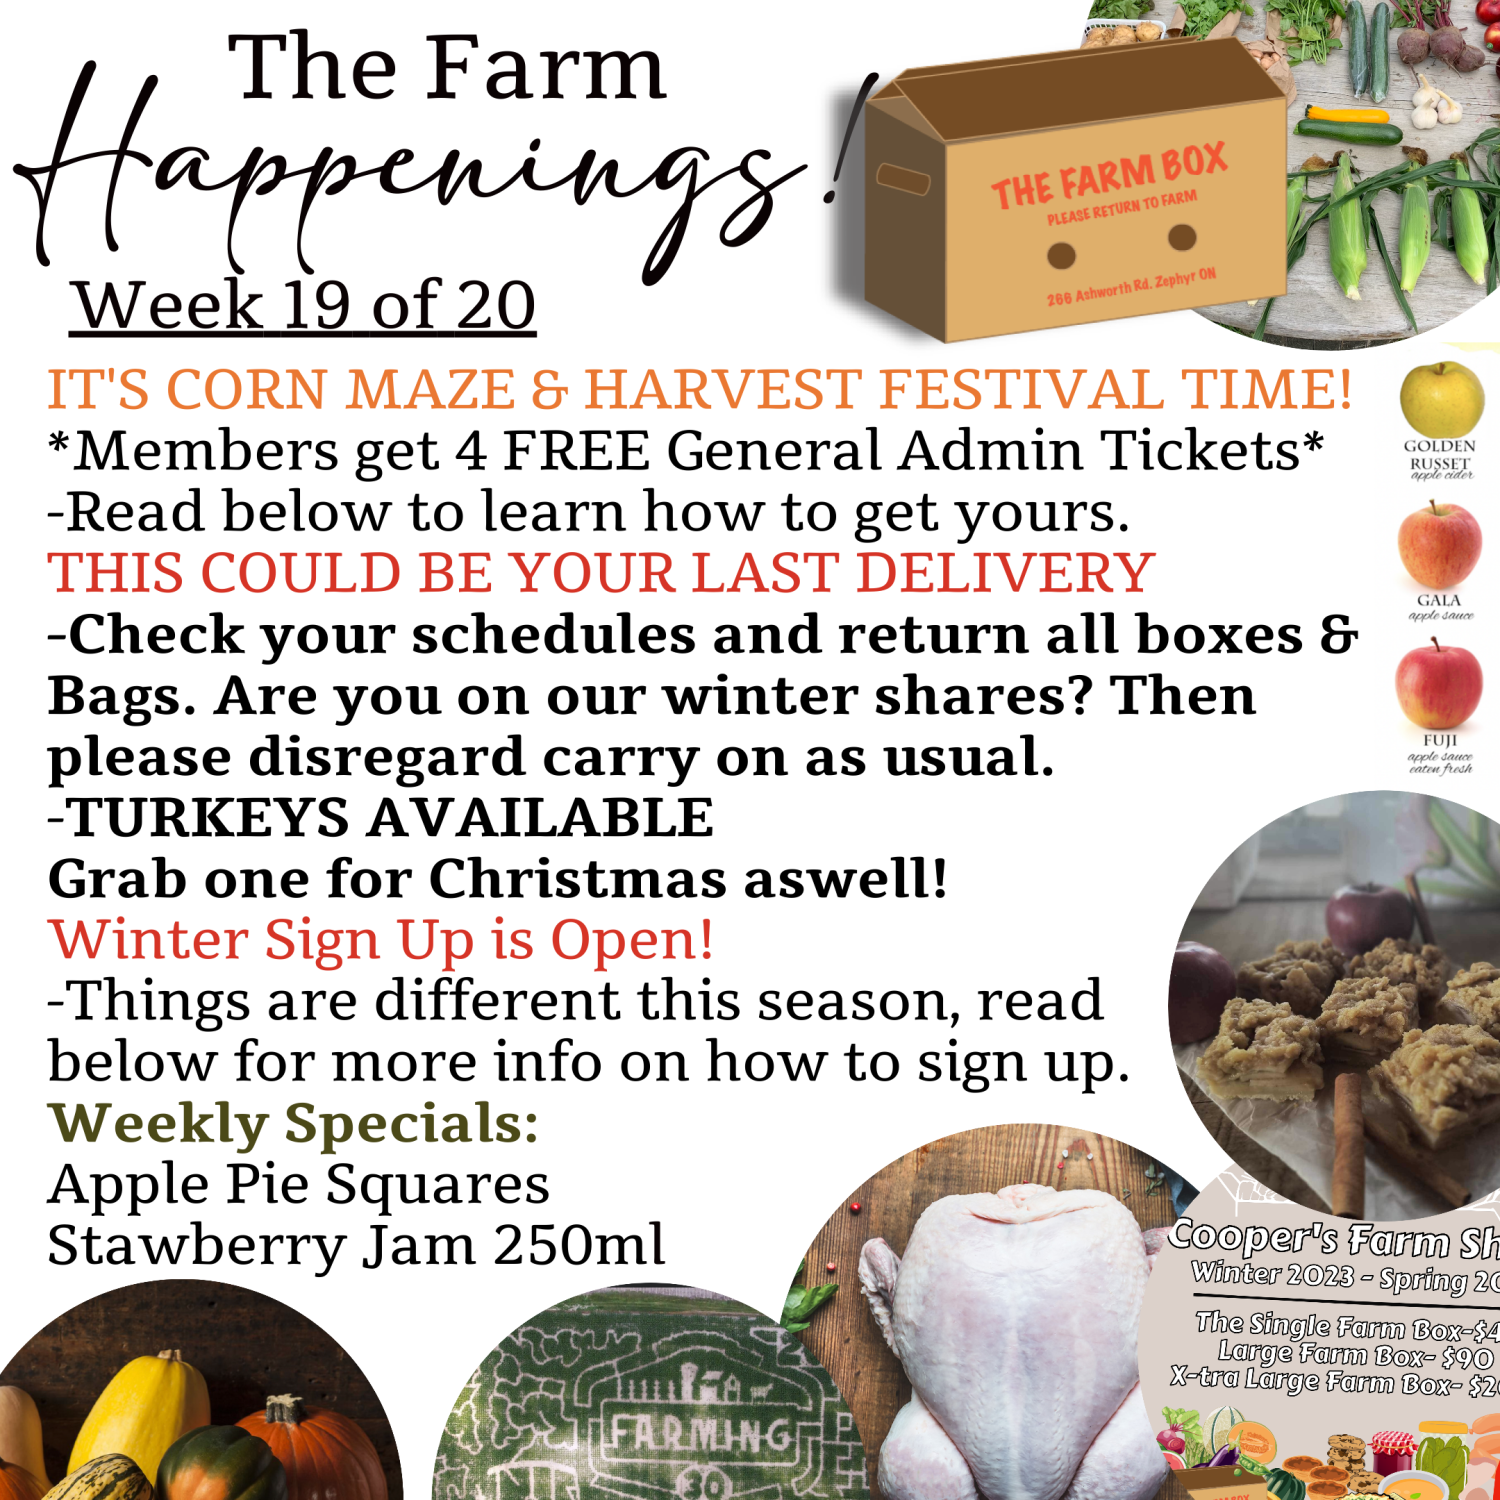 Next Happening: "The Farm Box"-Coopers CSA Farm Farm Happenings Week 19